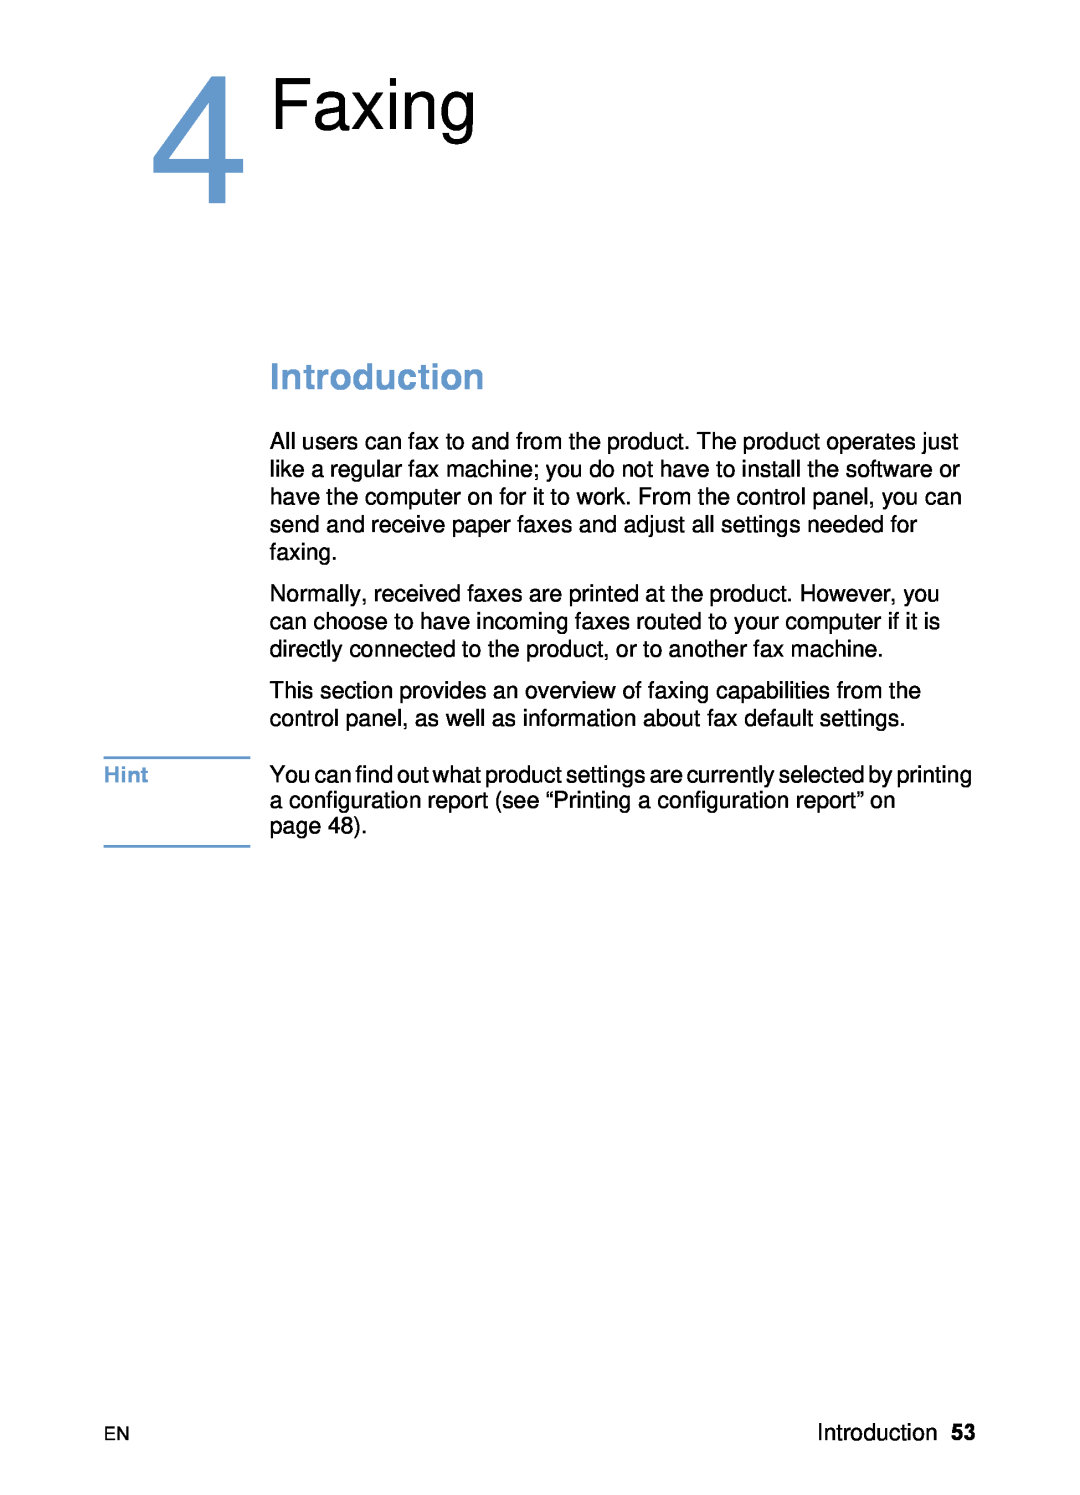 HP 3200 manual Faxing, Introduction, Hint 